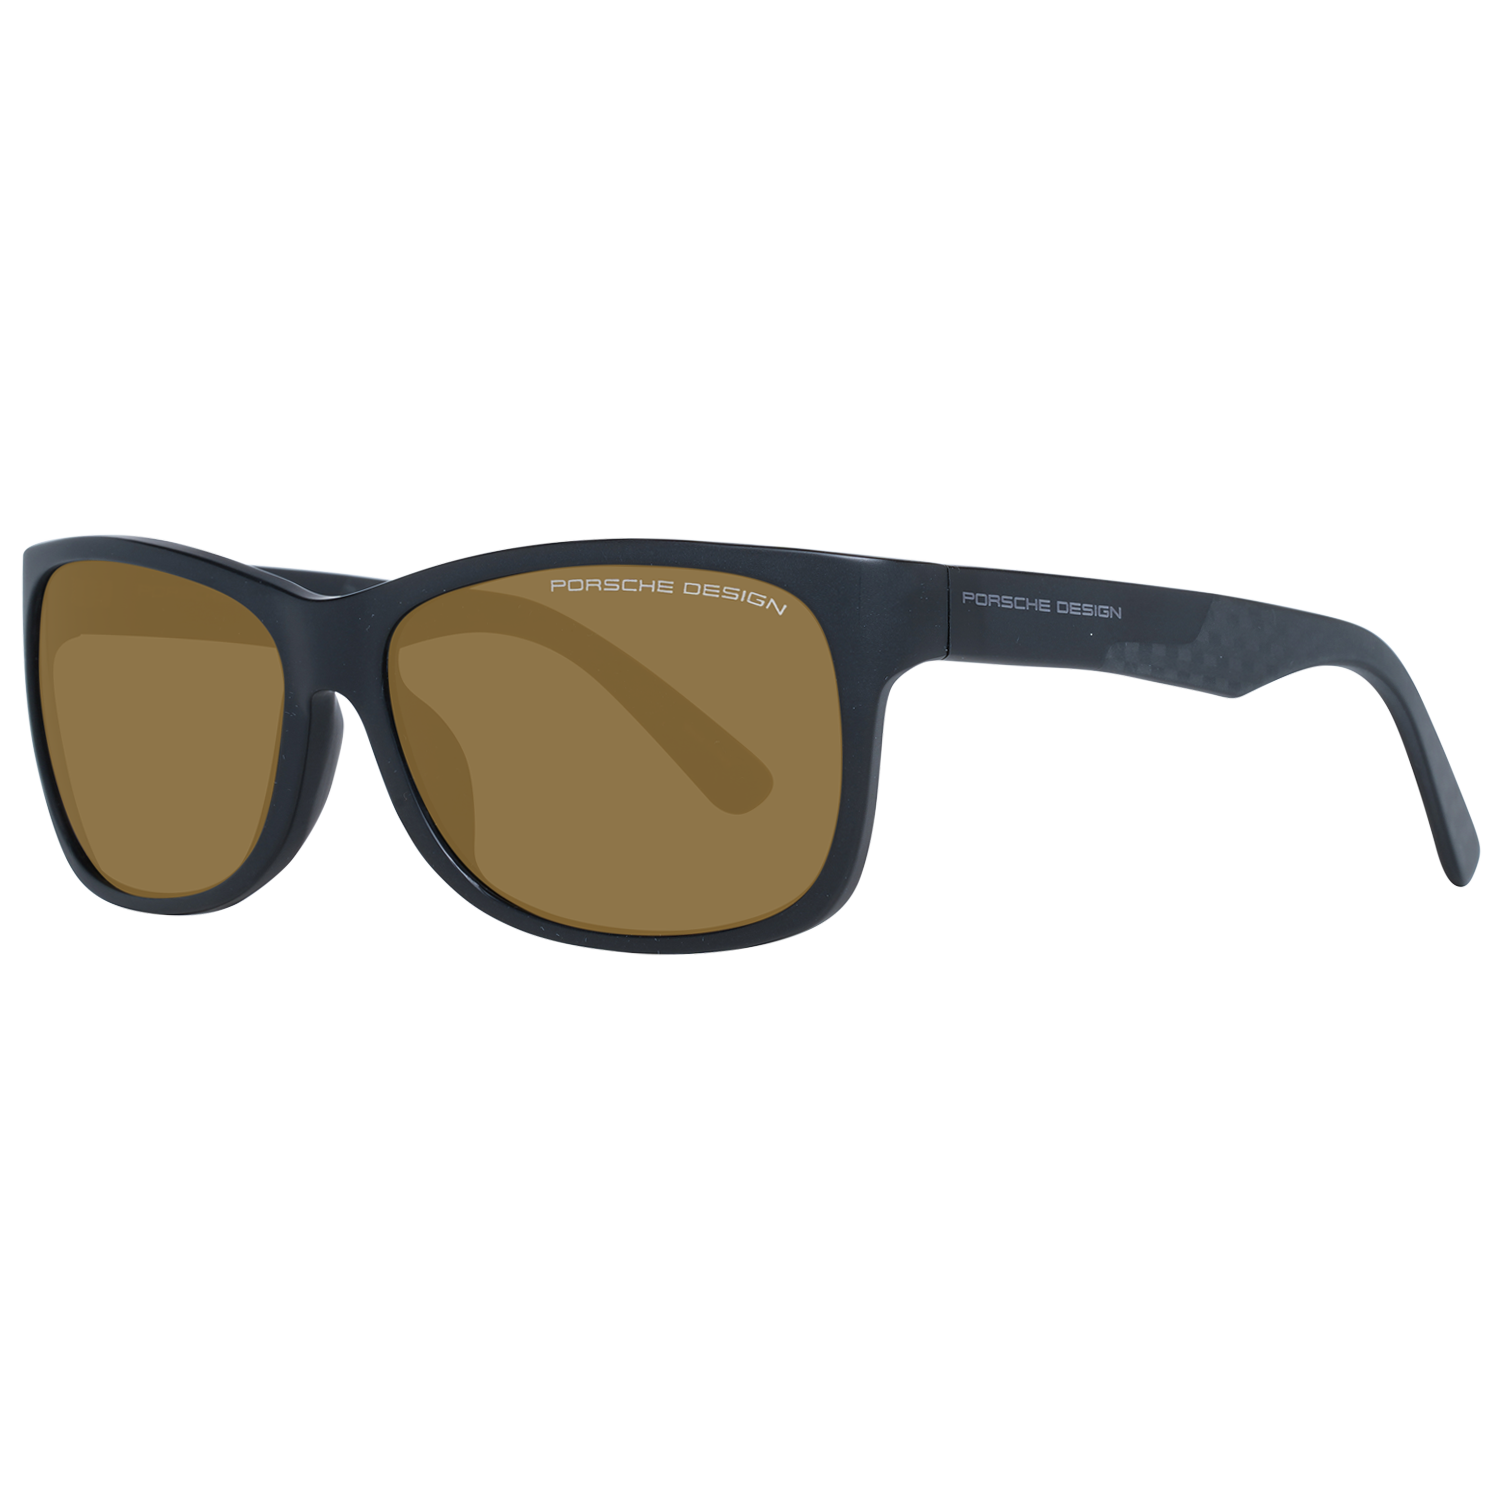 Porsche Design Sunglasses Men Rectangle Black P8907 A 62